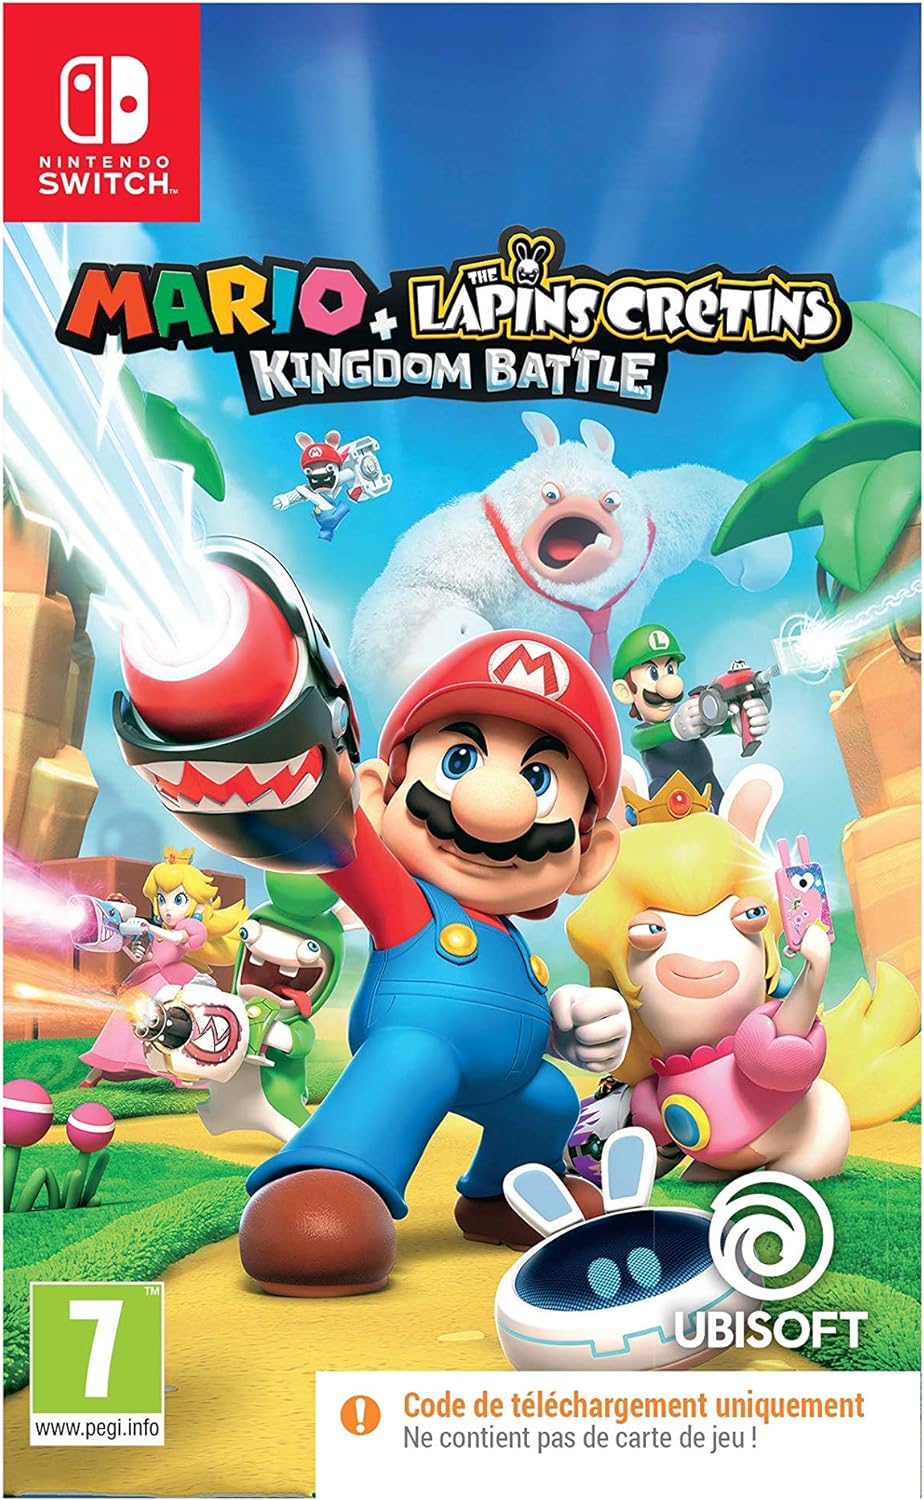 Mario + The Lapins Crétins Kingdom Battle Code In Box (Nintendo Switch).jpg